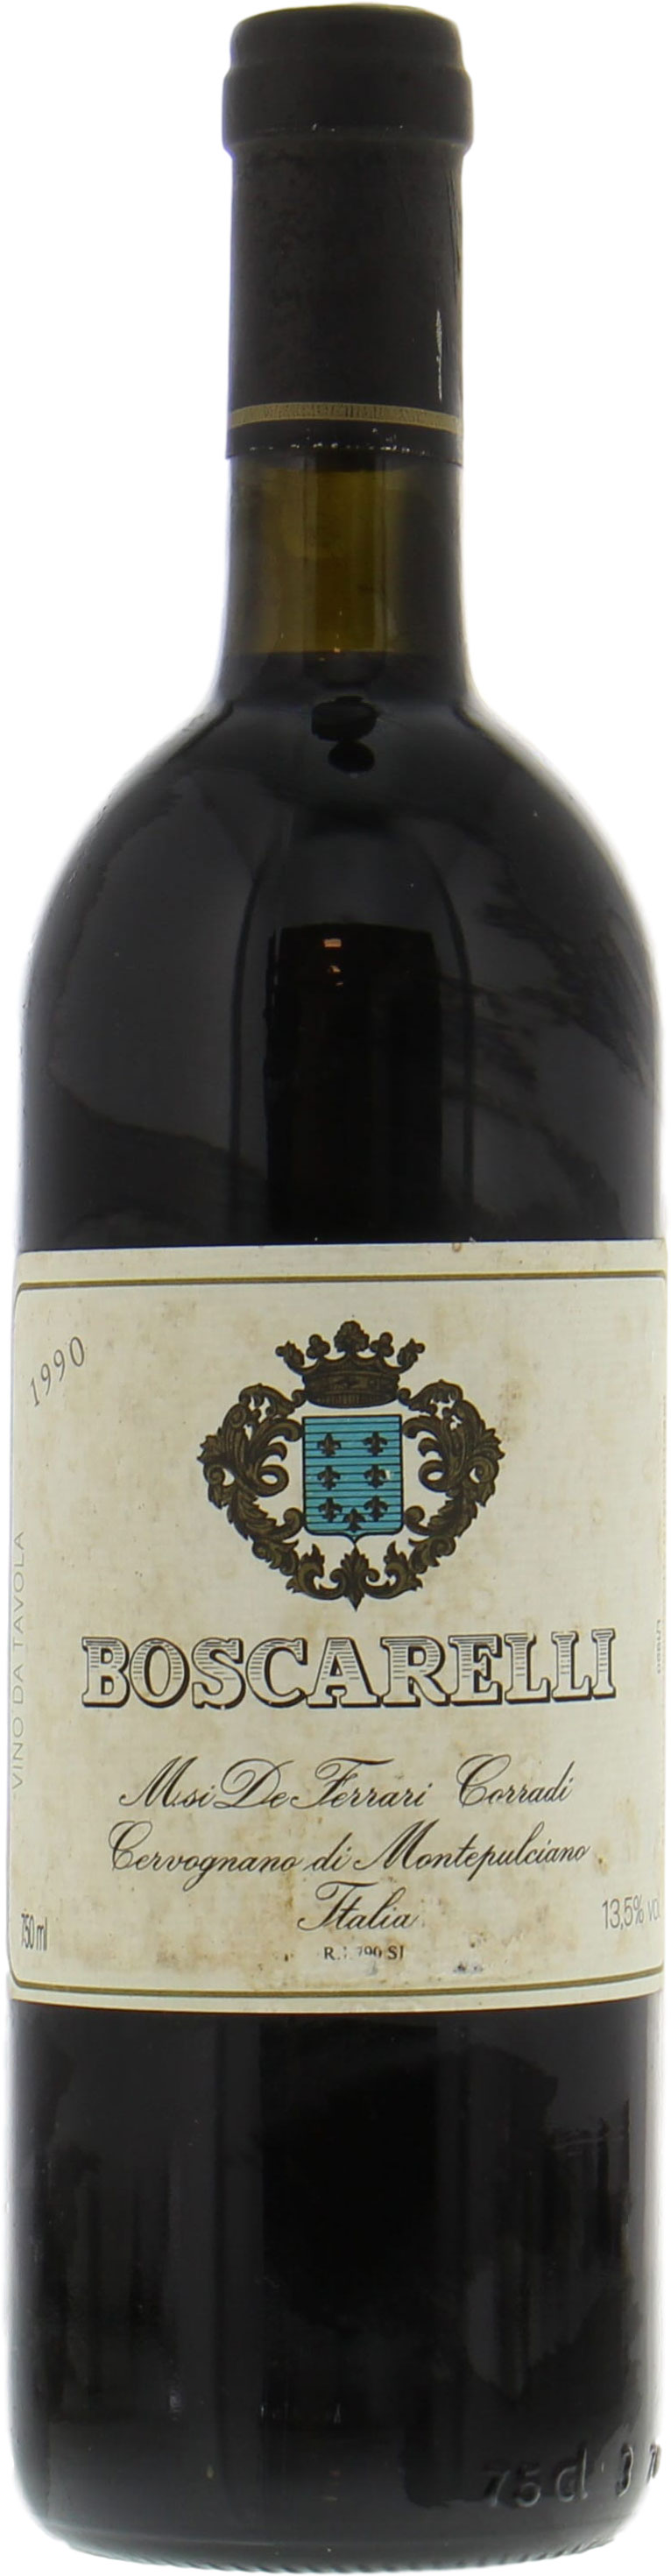 Boscarelli - Proprietary Red Wine 1990